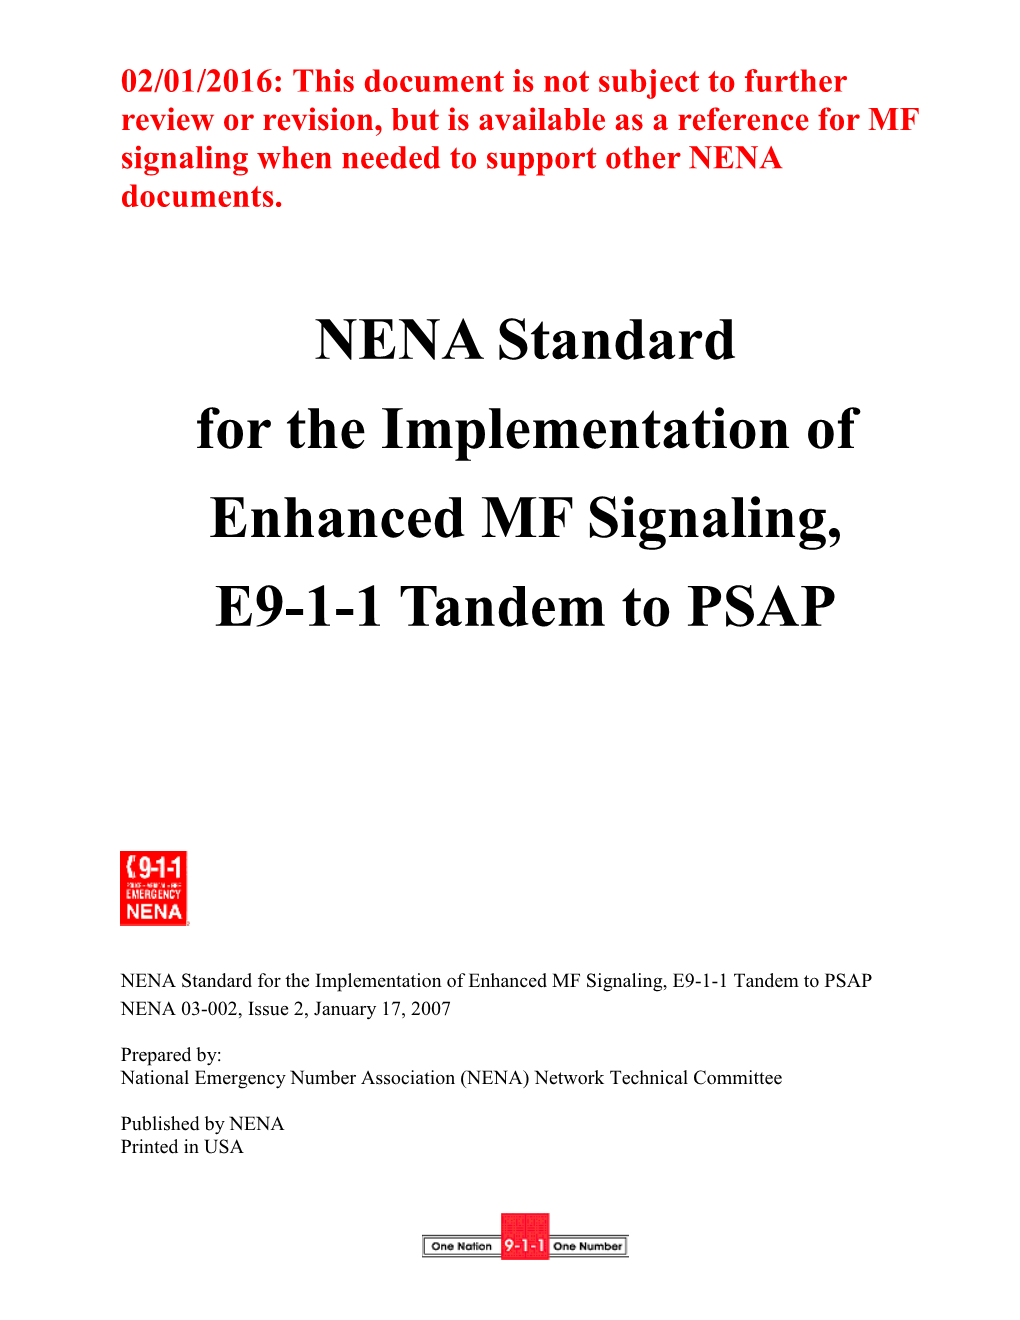 Enhanced MF Signaling, E9-1-1 Tandem to PSAP